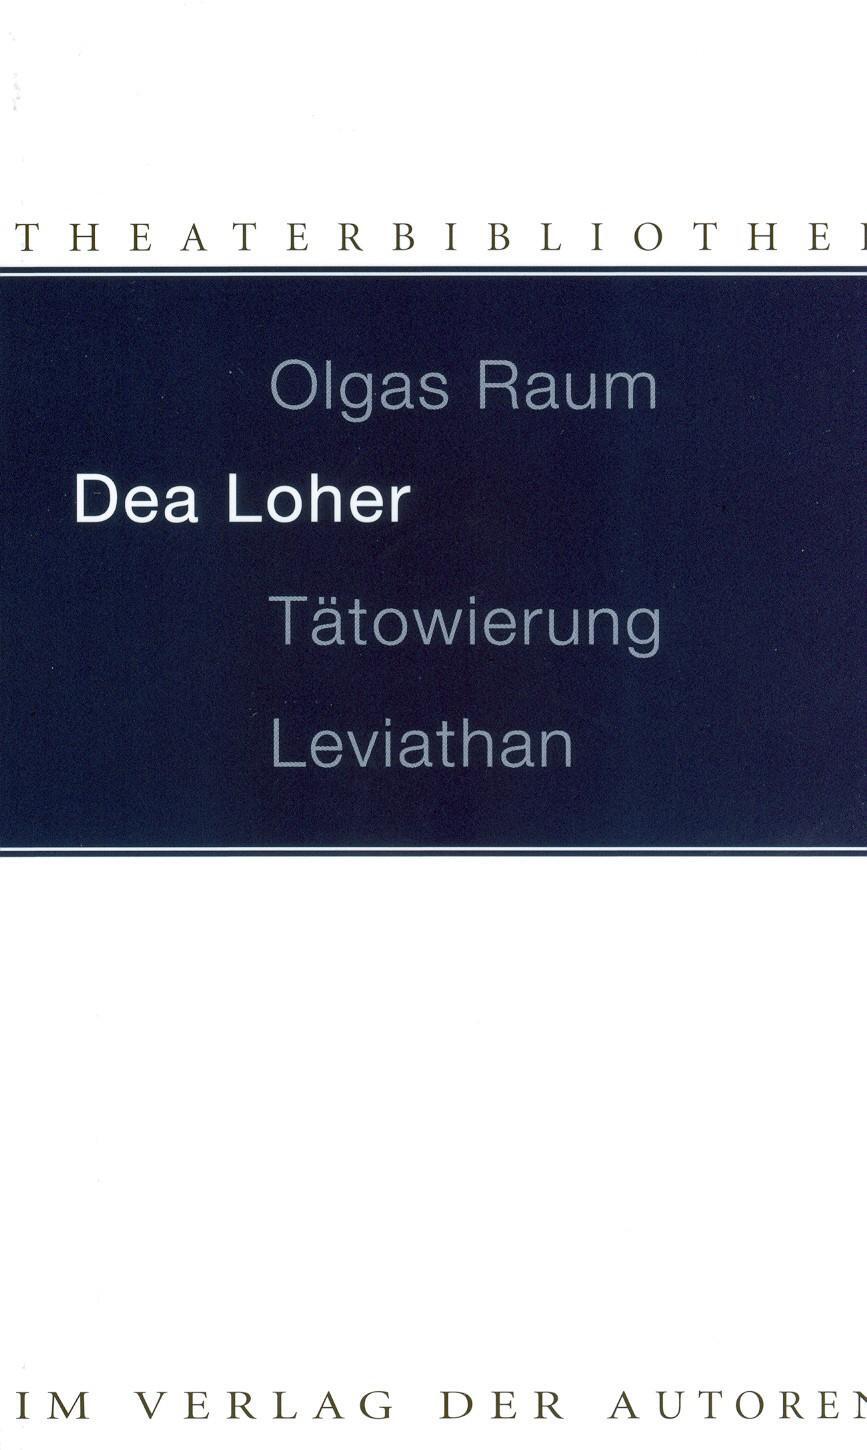 Olgas Raum / Tätowierung / Leviathan - Loher, Dea